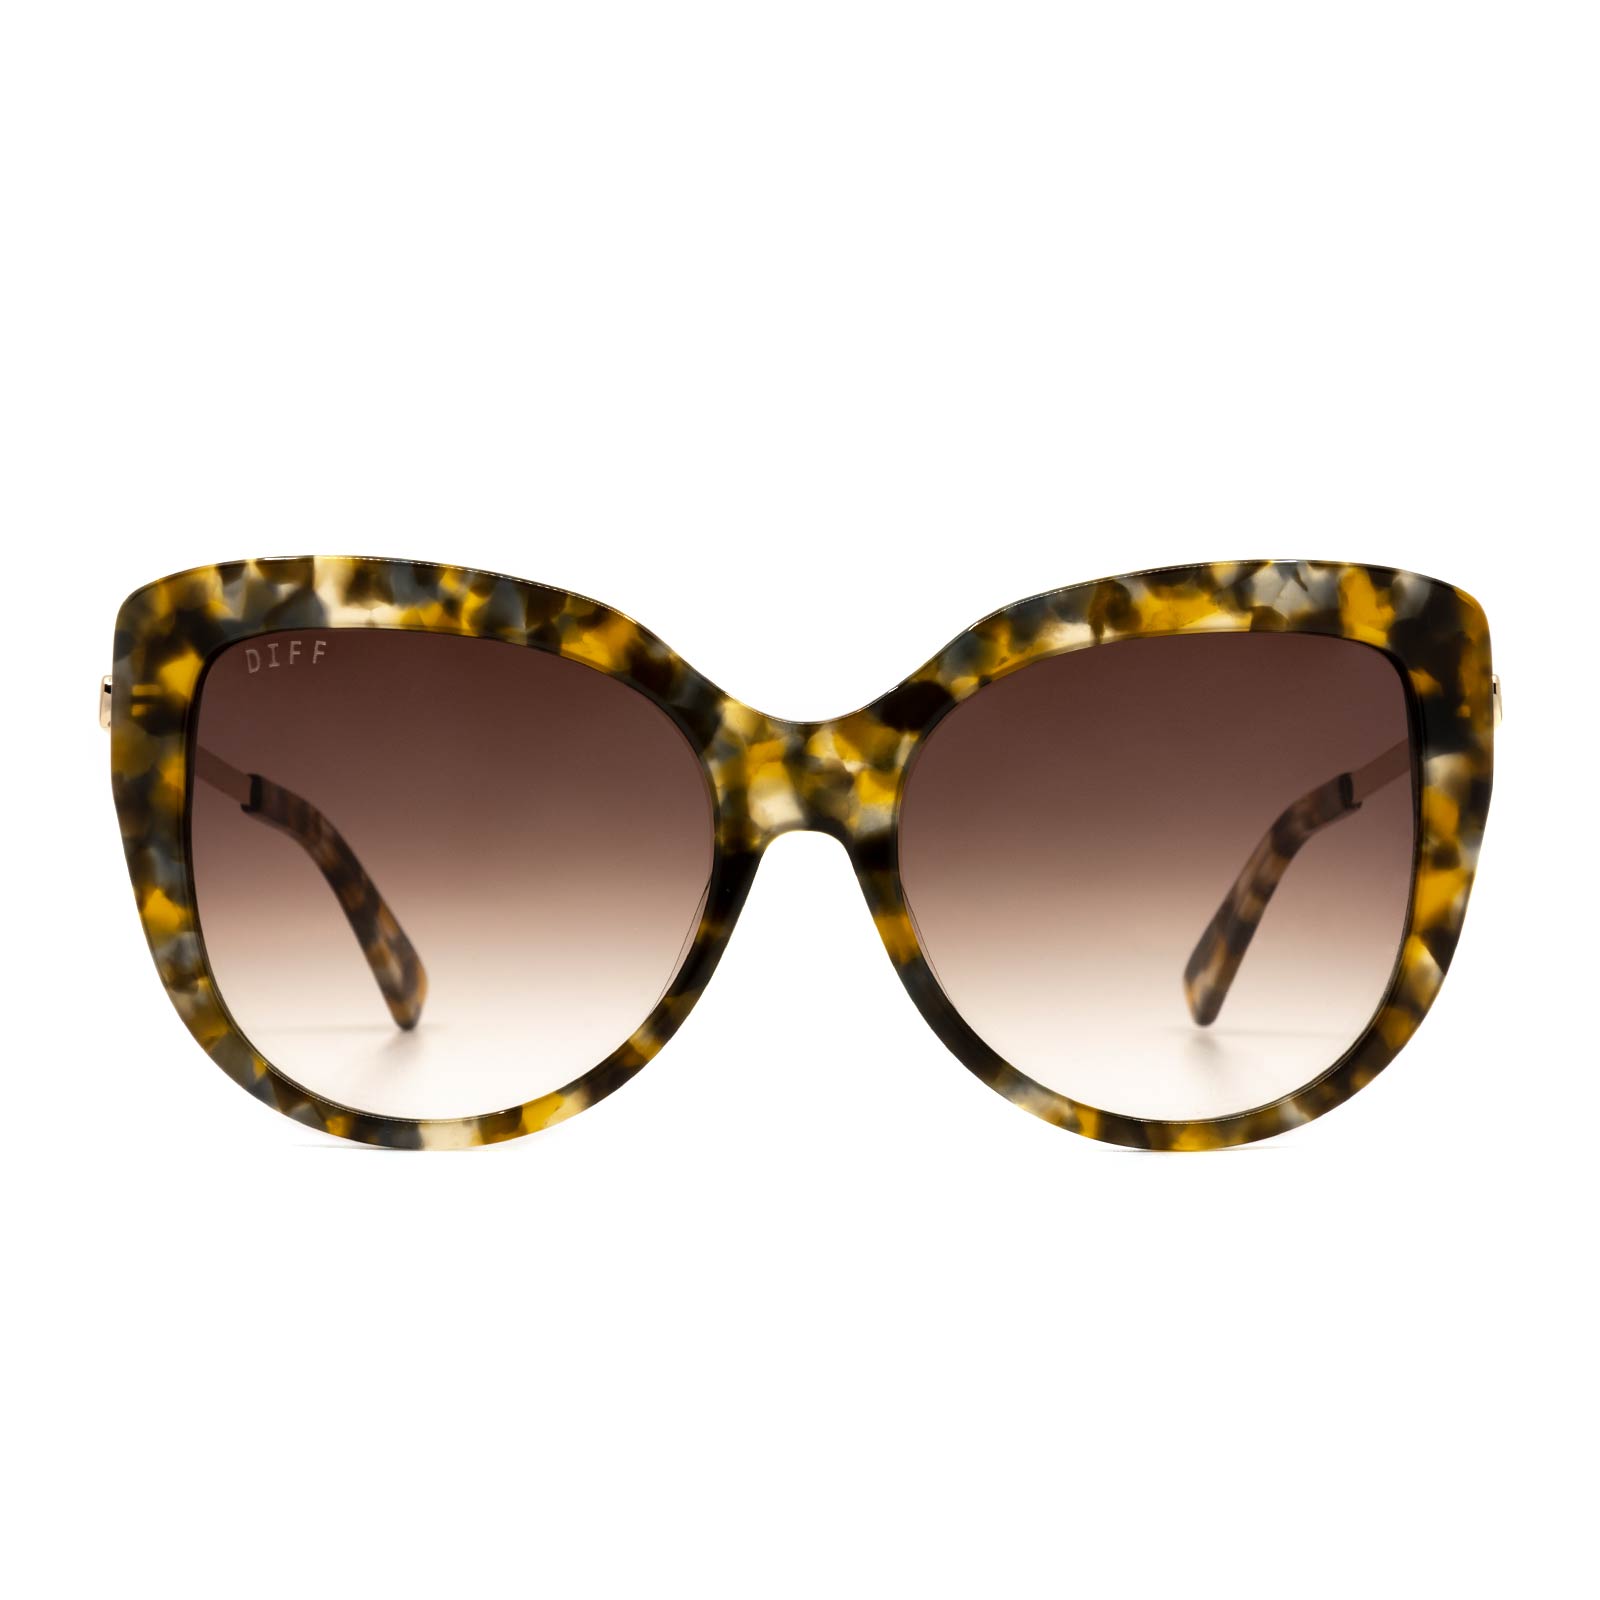 Diff Eyewear Women's Sunglass Pink Cleo Cat-Eye Sunglasses One-Size